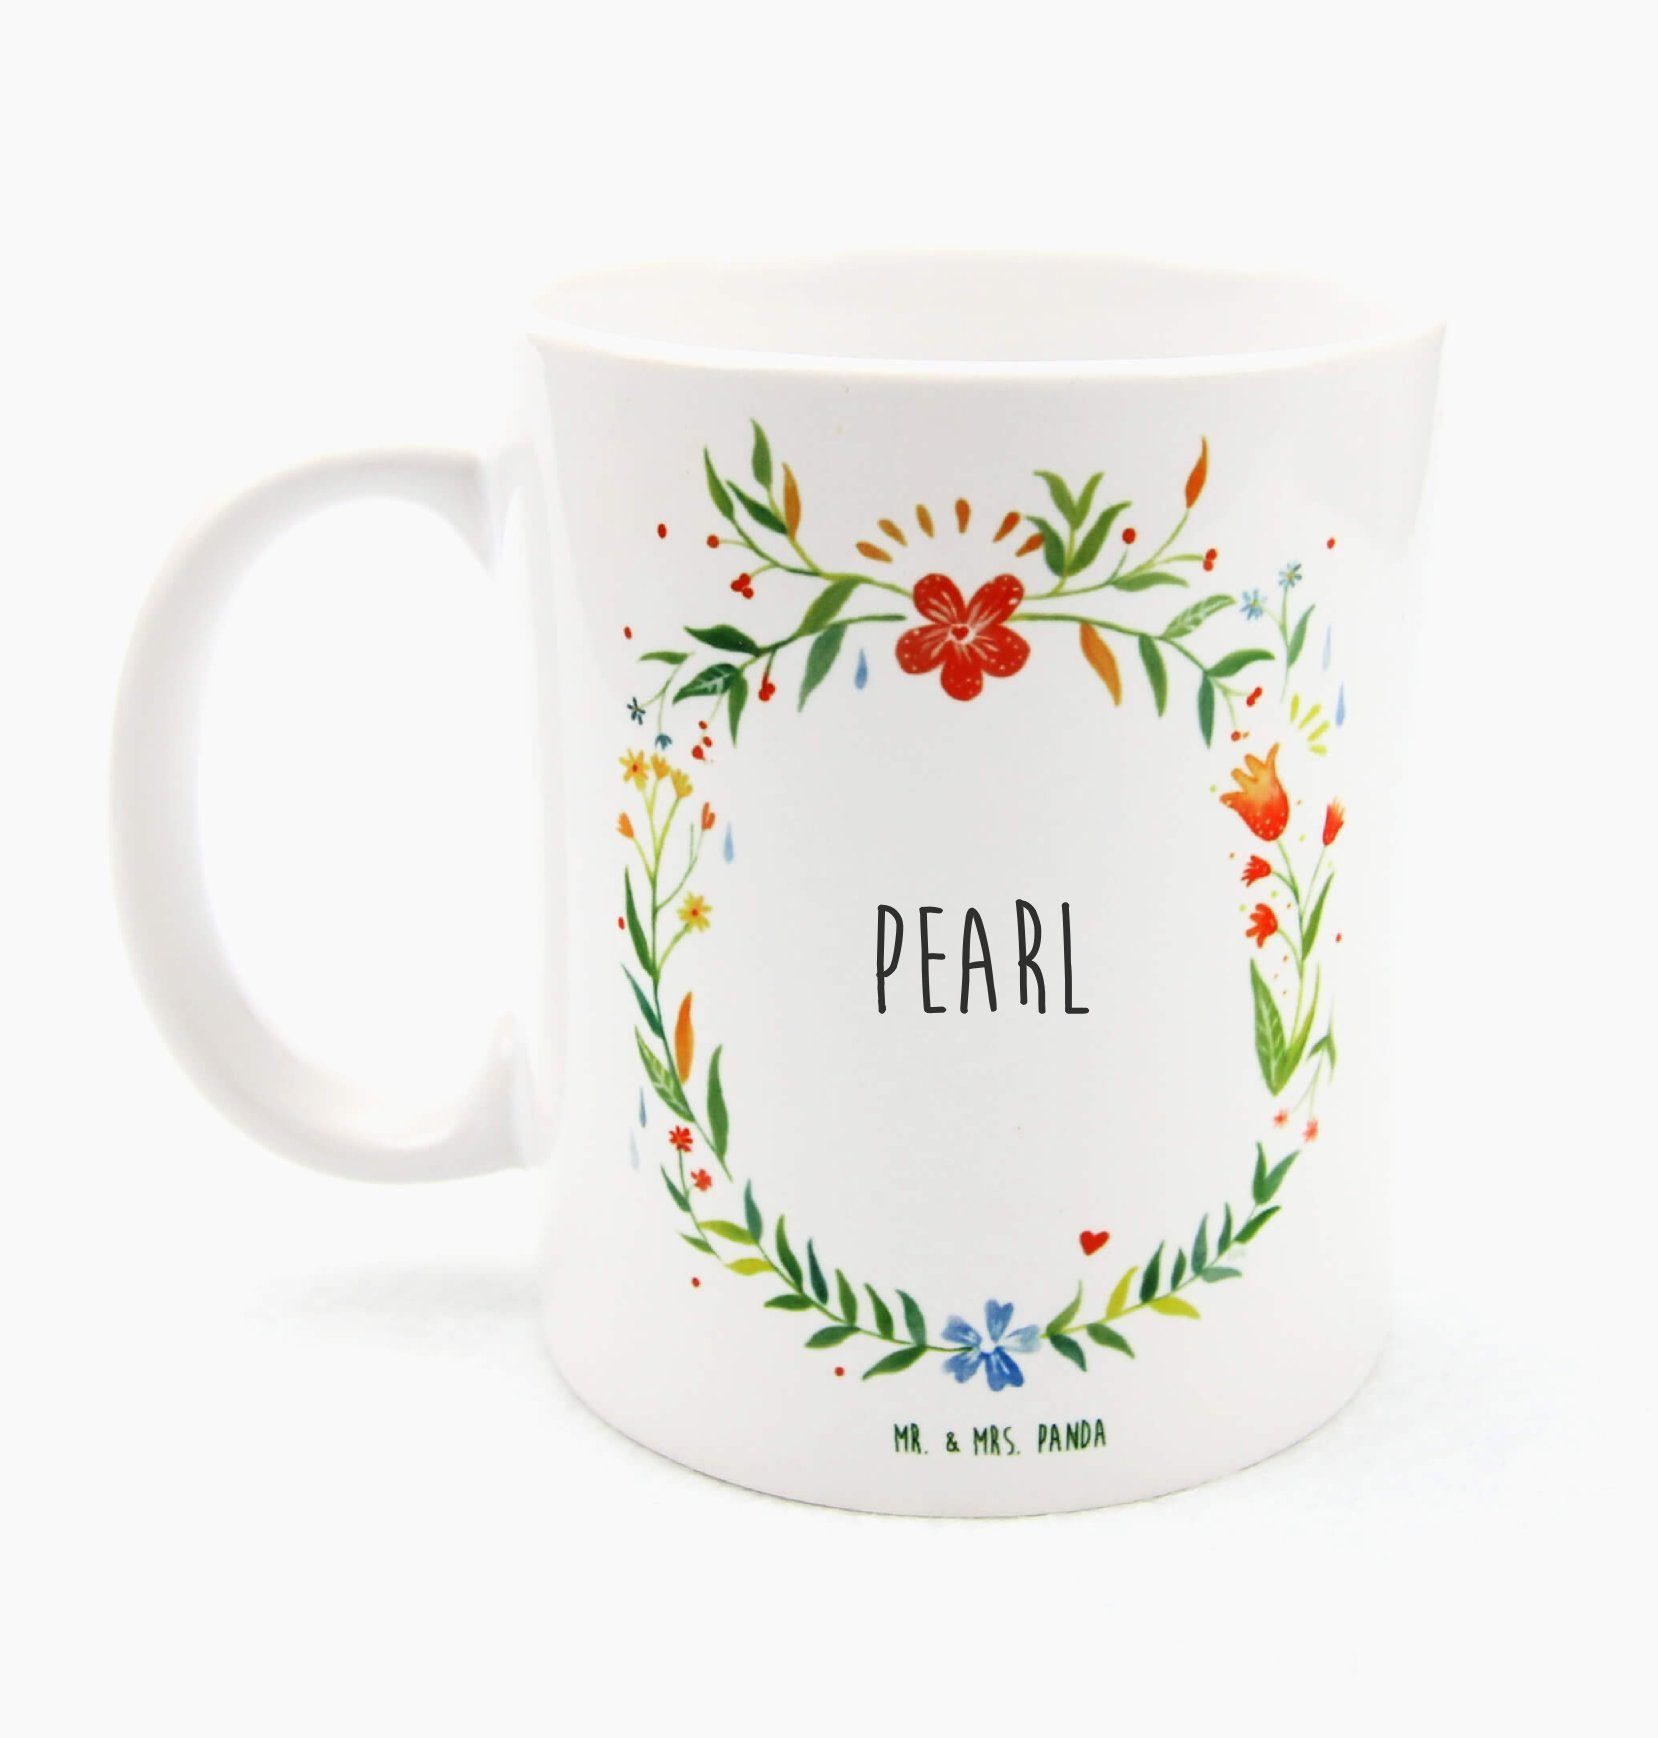 Mr. & Tasse, Keramik Pearl Kaffeetasse, Motive, Mrs. Tasse - Geschenk, Panda Teetasse, Becher, Tasse